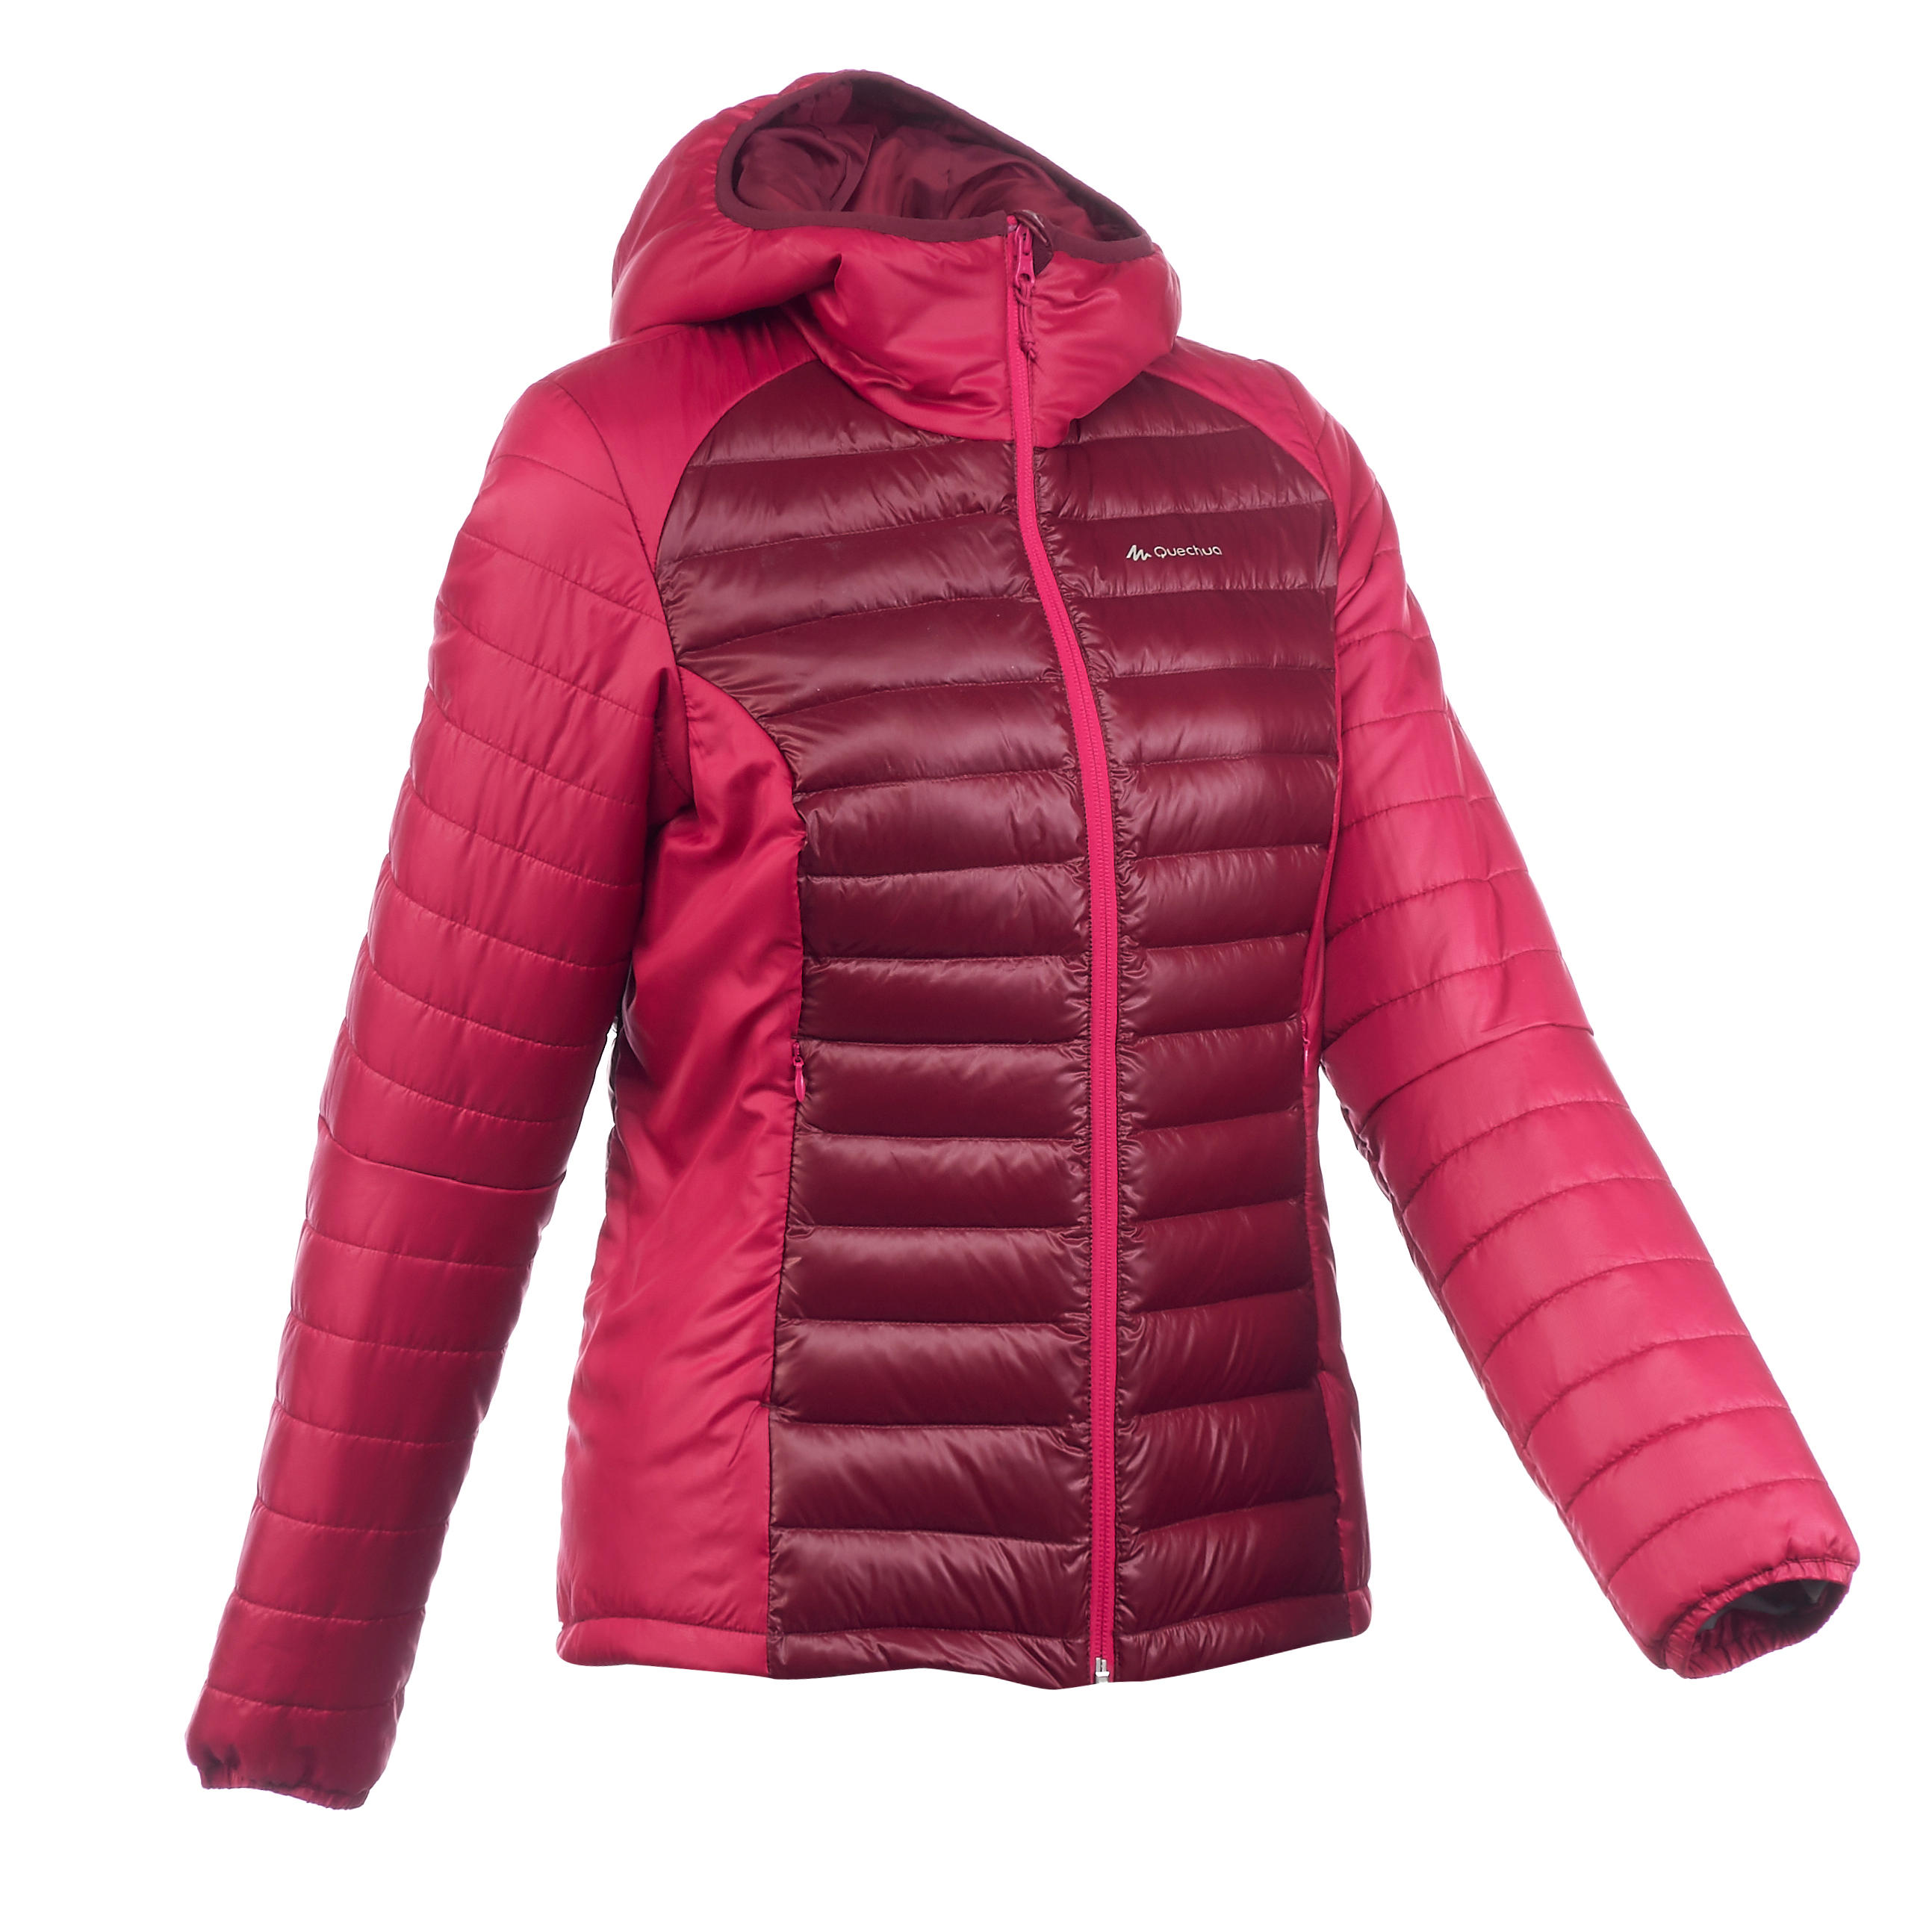 FORCLAZ Women's X-Light 1 pink trekking down jacket